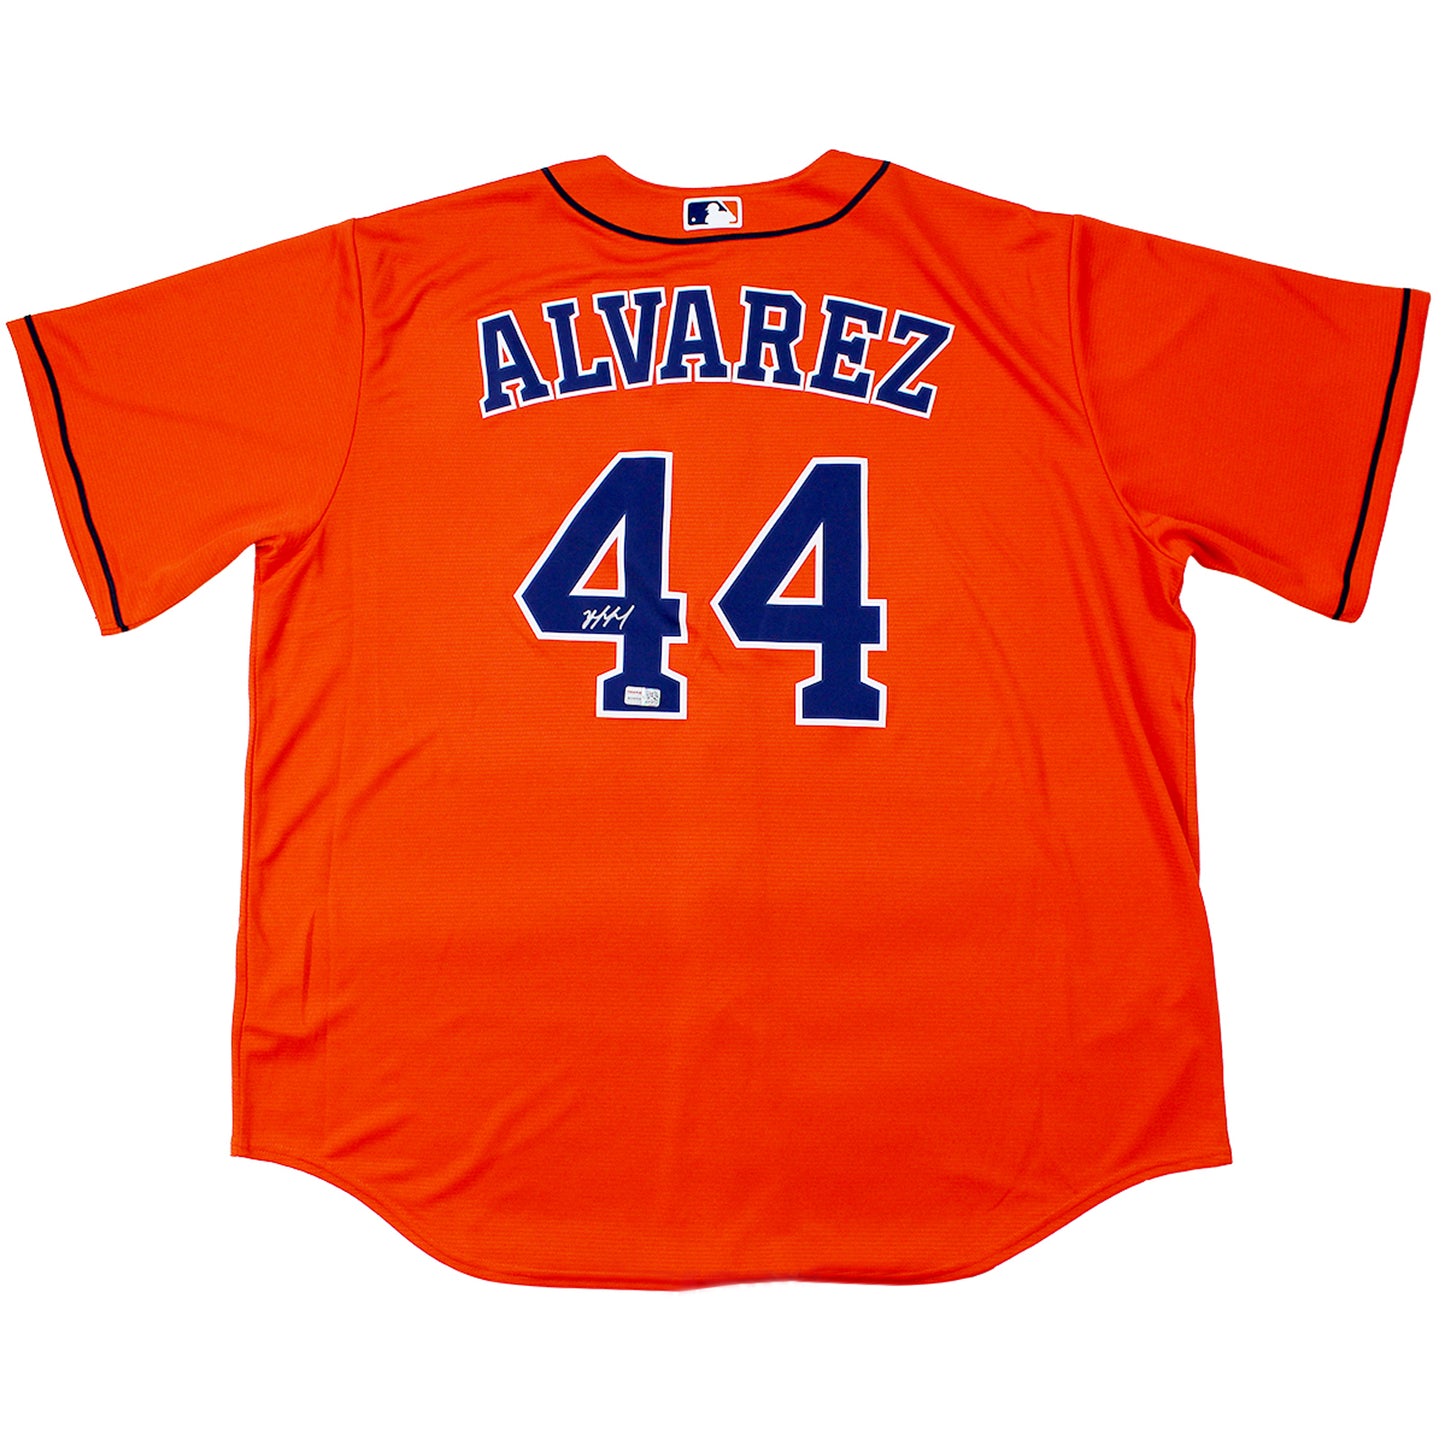 YORDAN ALVAREZ Autographed Houston Astros (Orange #44) Nike Official Jersey